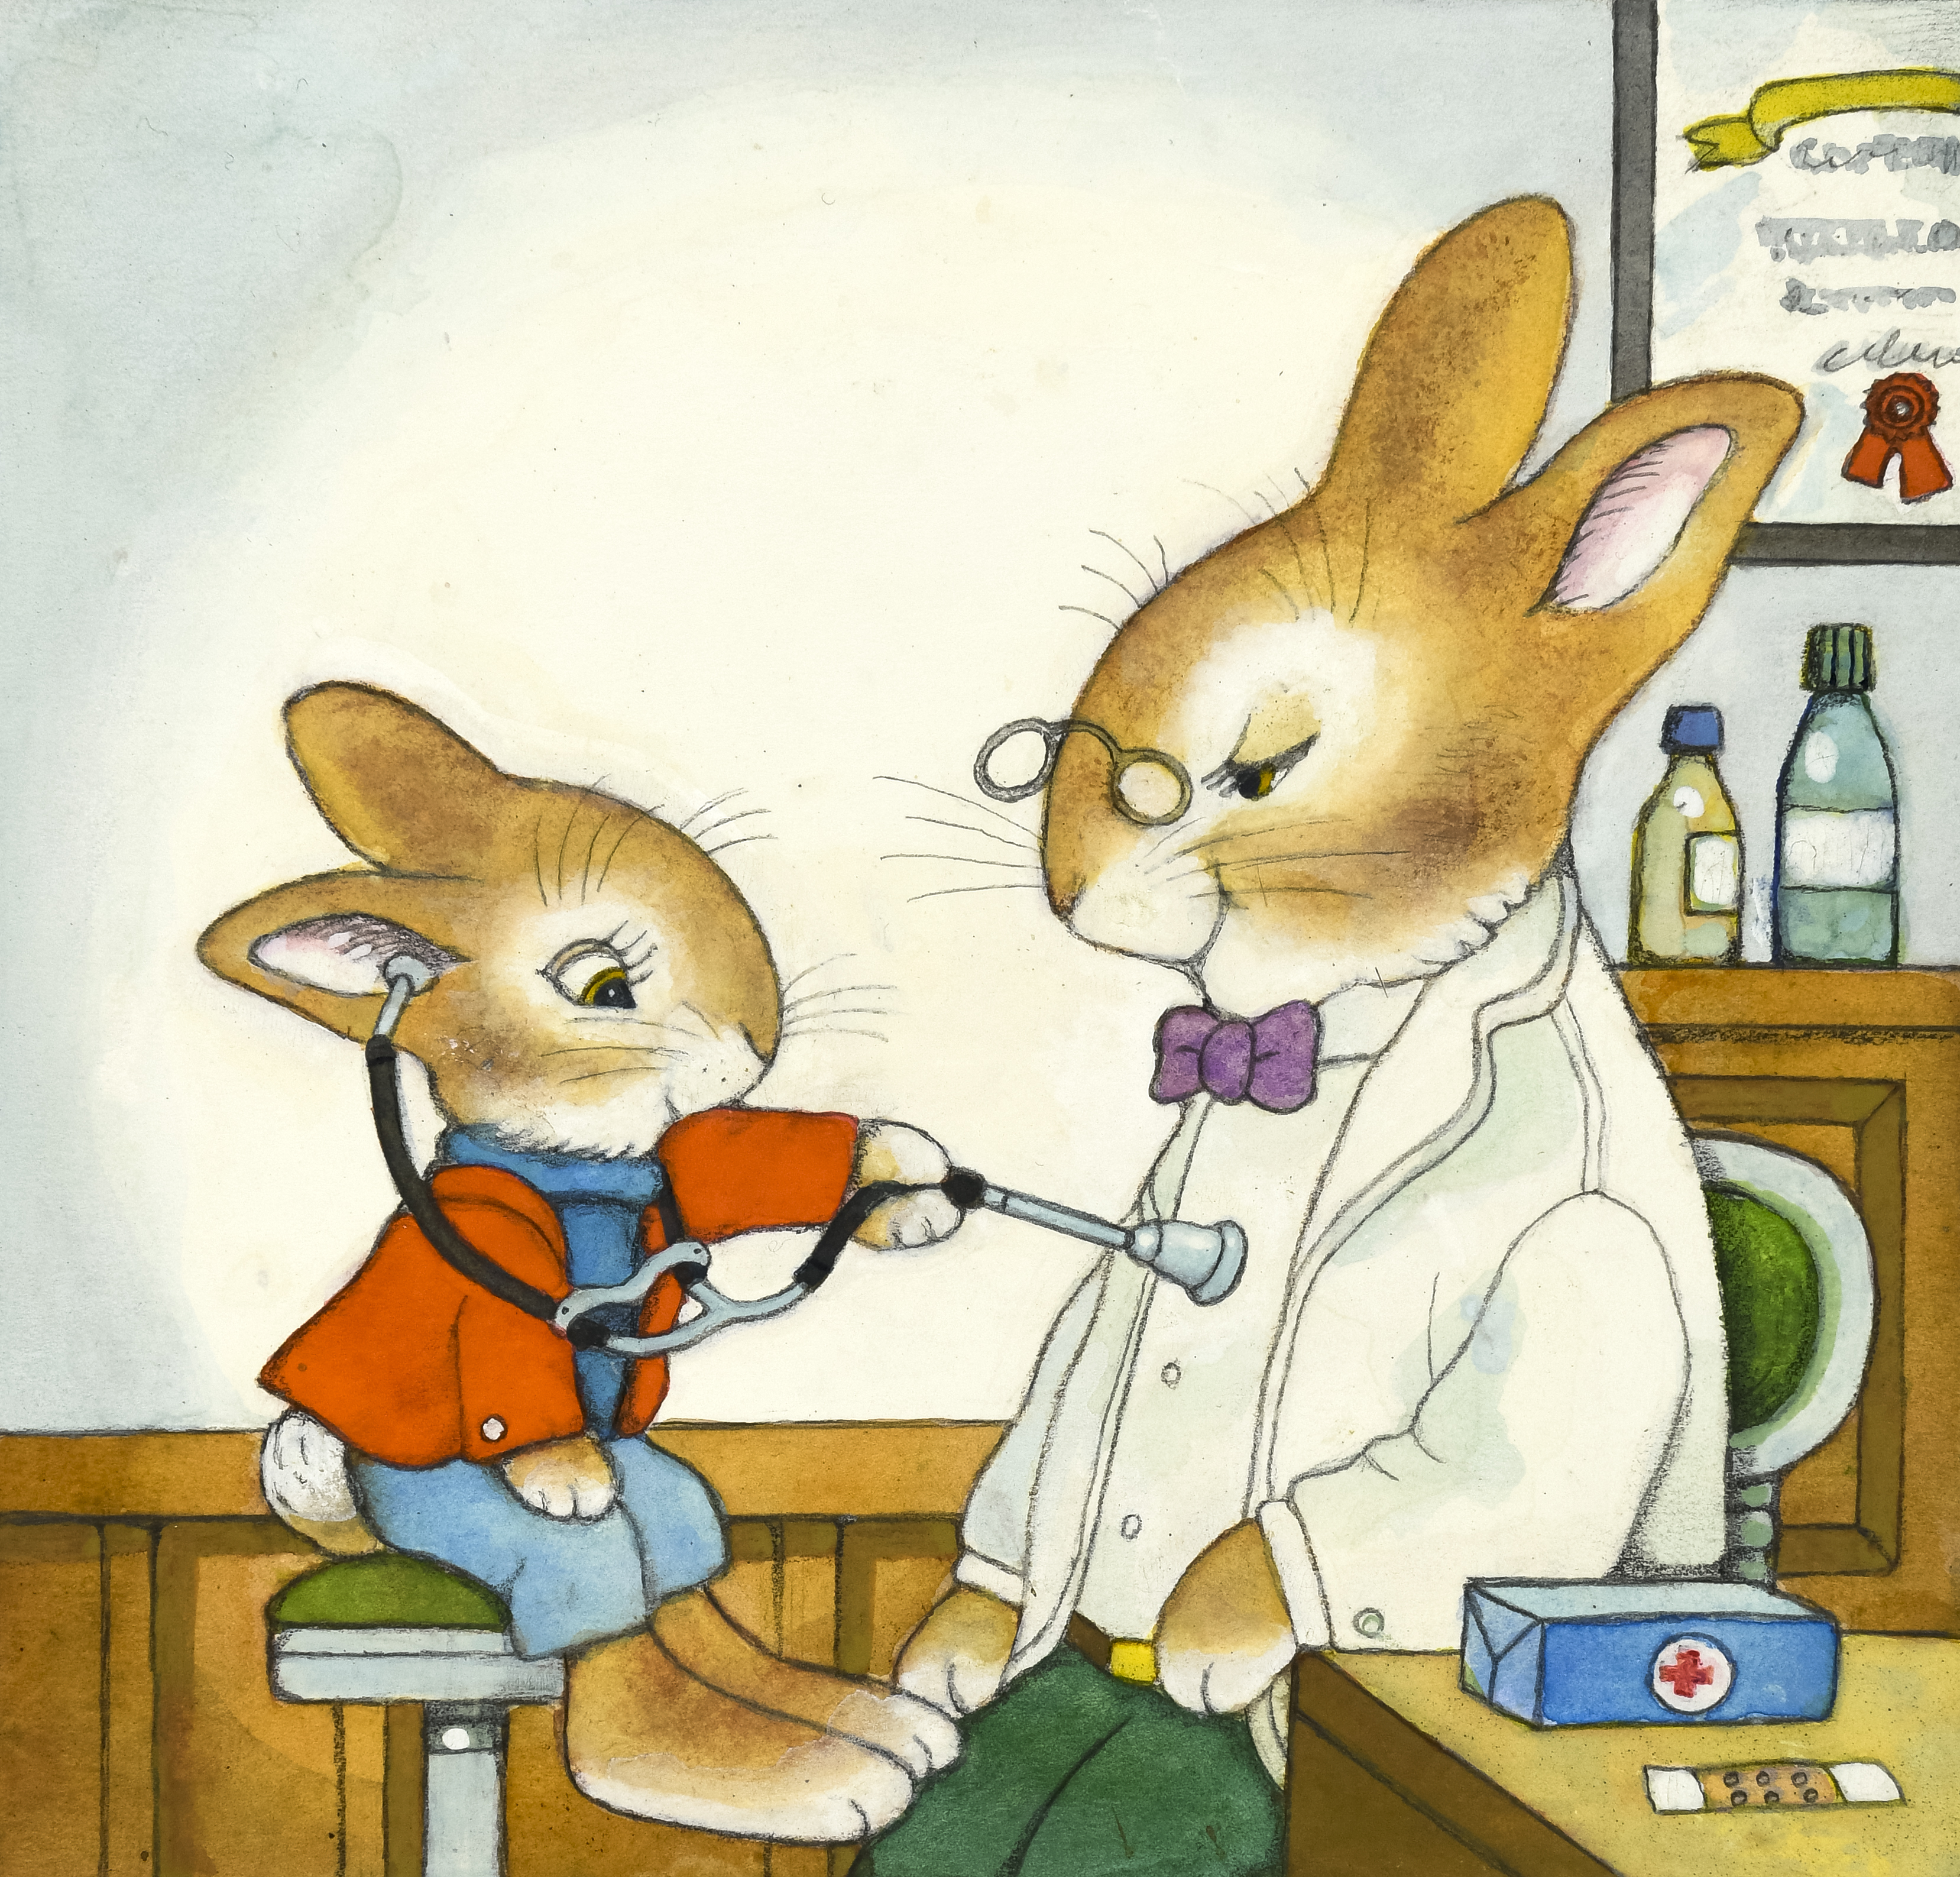 Illustration of little rabbit learning to use stethoscope on doctor rabbit. 